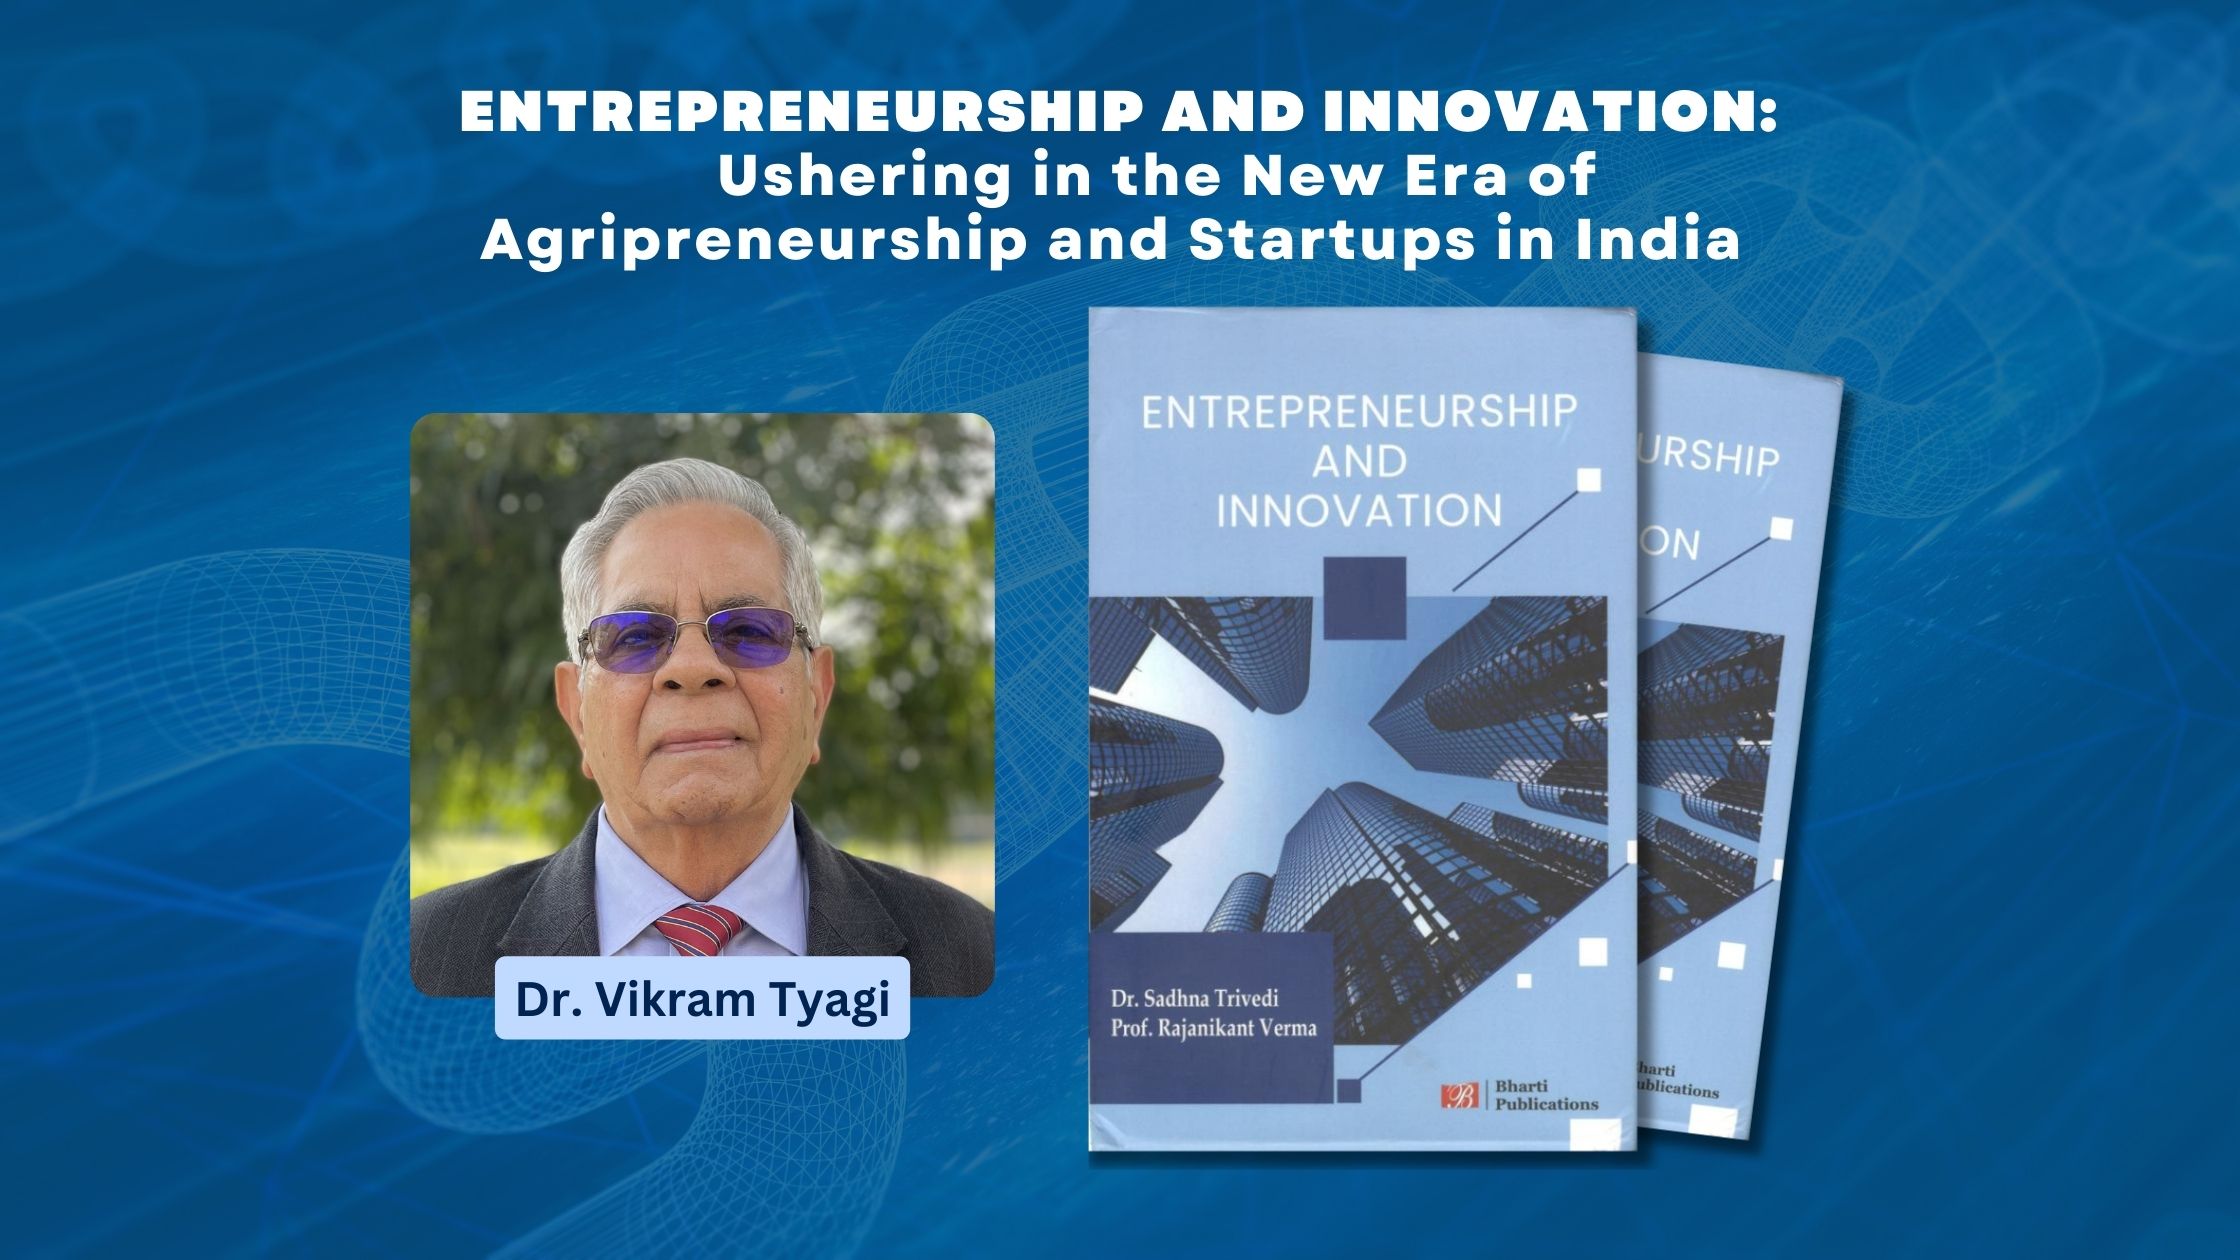 JK Business School’s Beacon of Innovation: Dr. Vikram Tyagi’s Scholastic Contributions